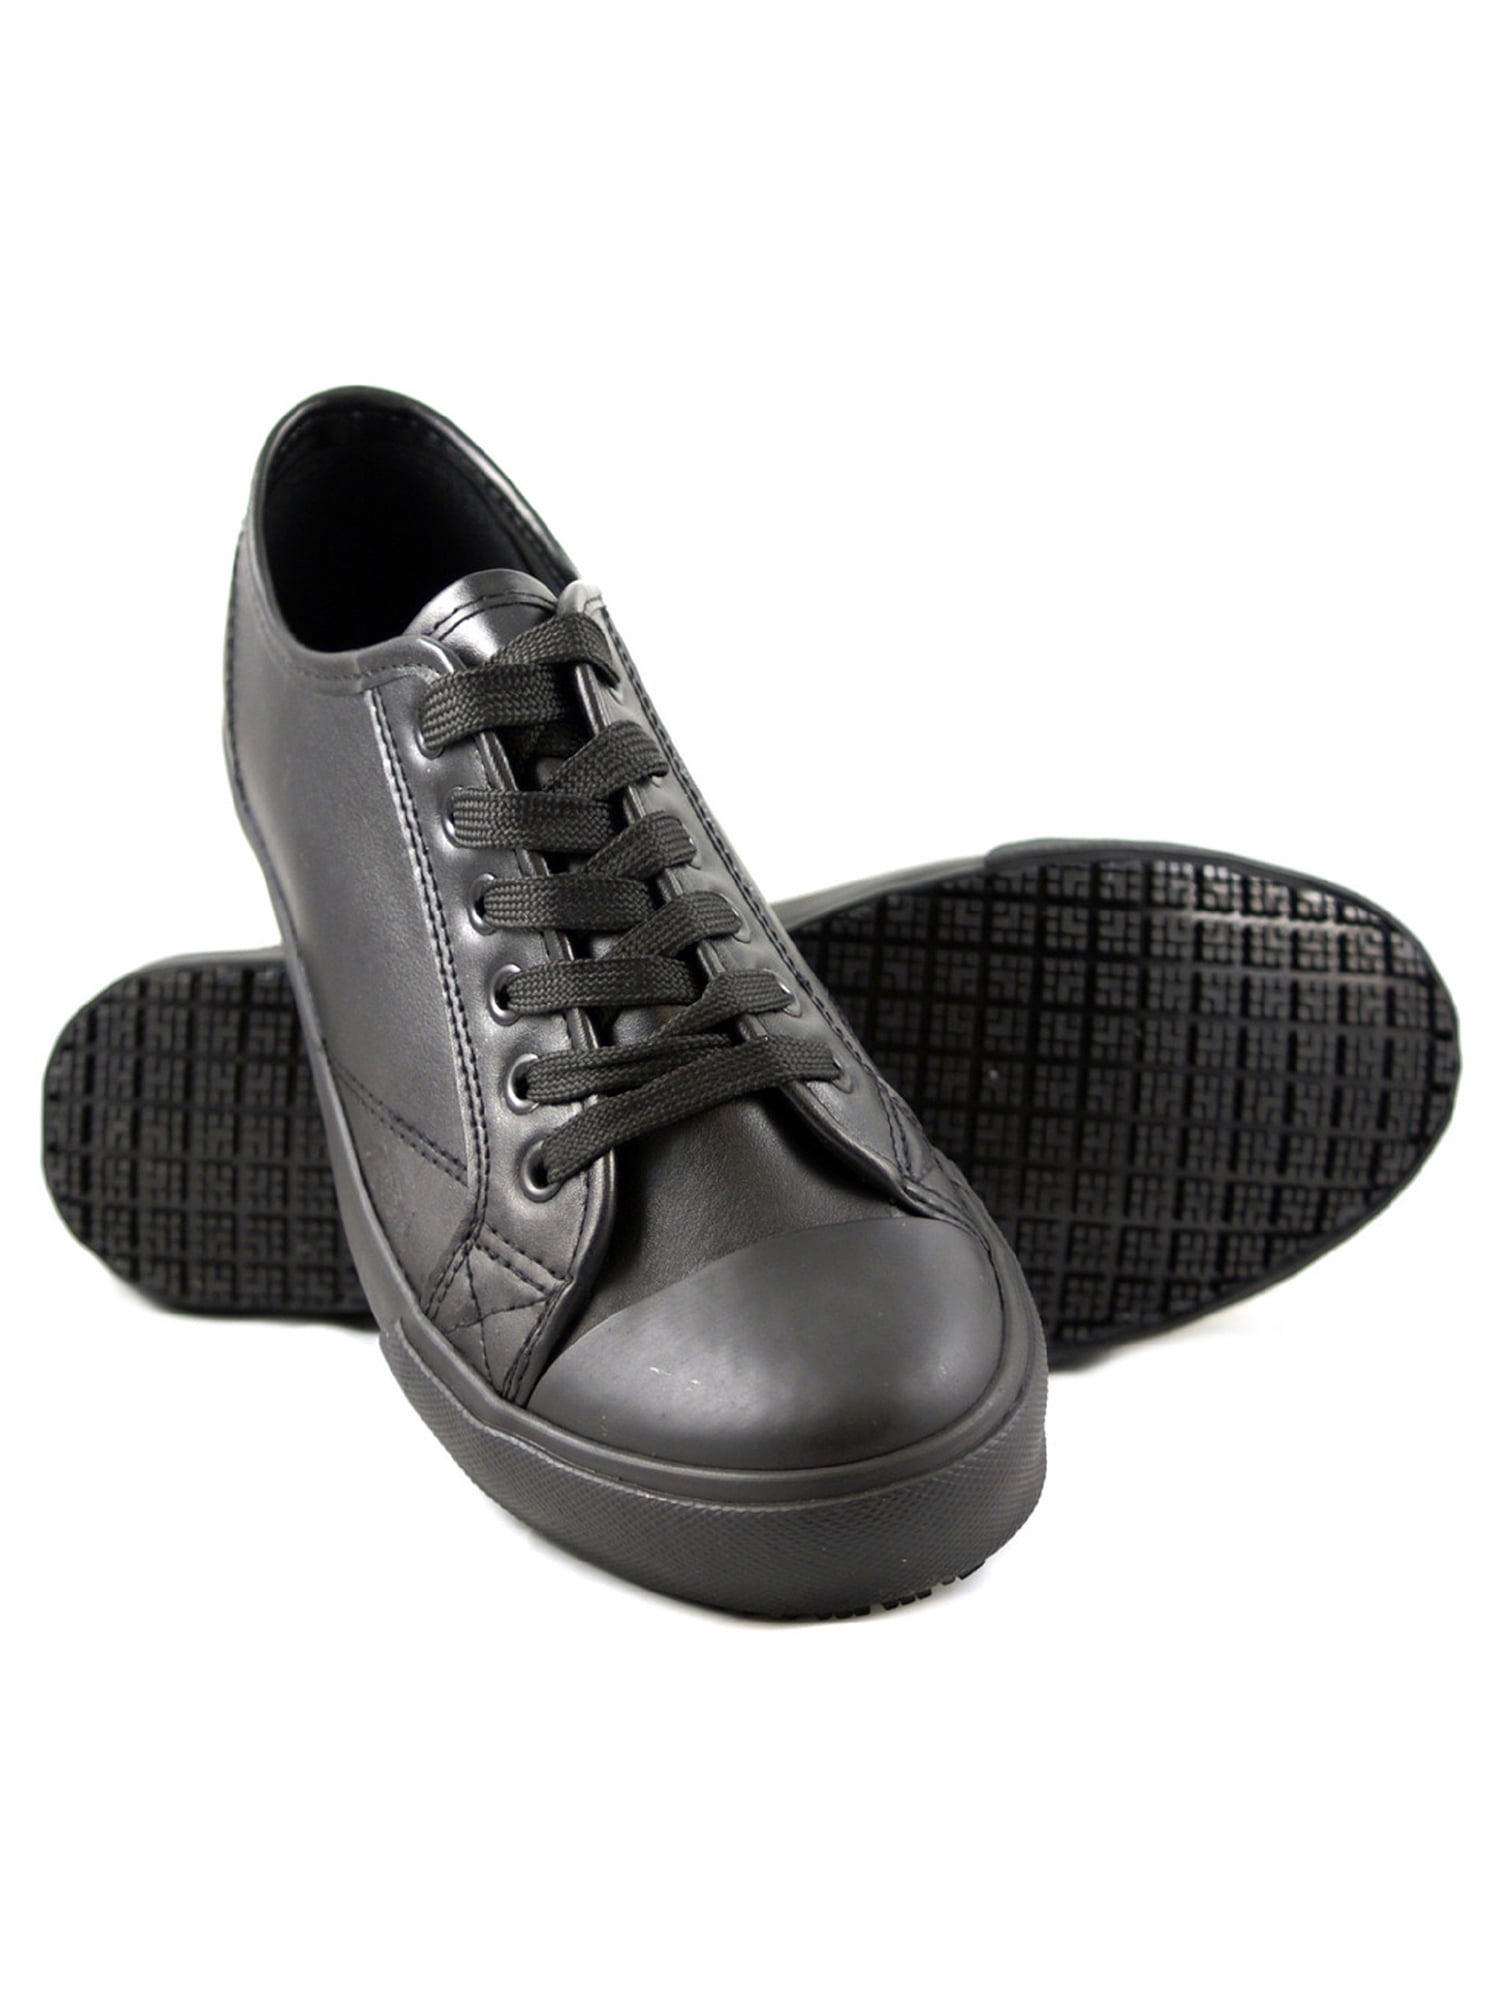 oil water slip resistant shoes